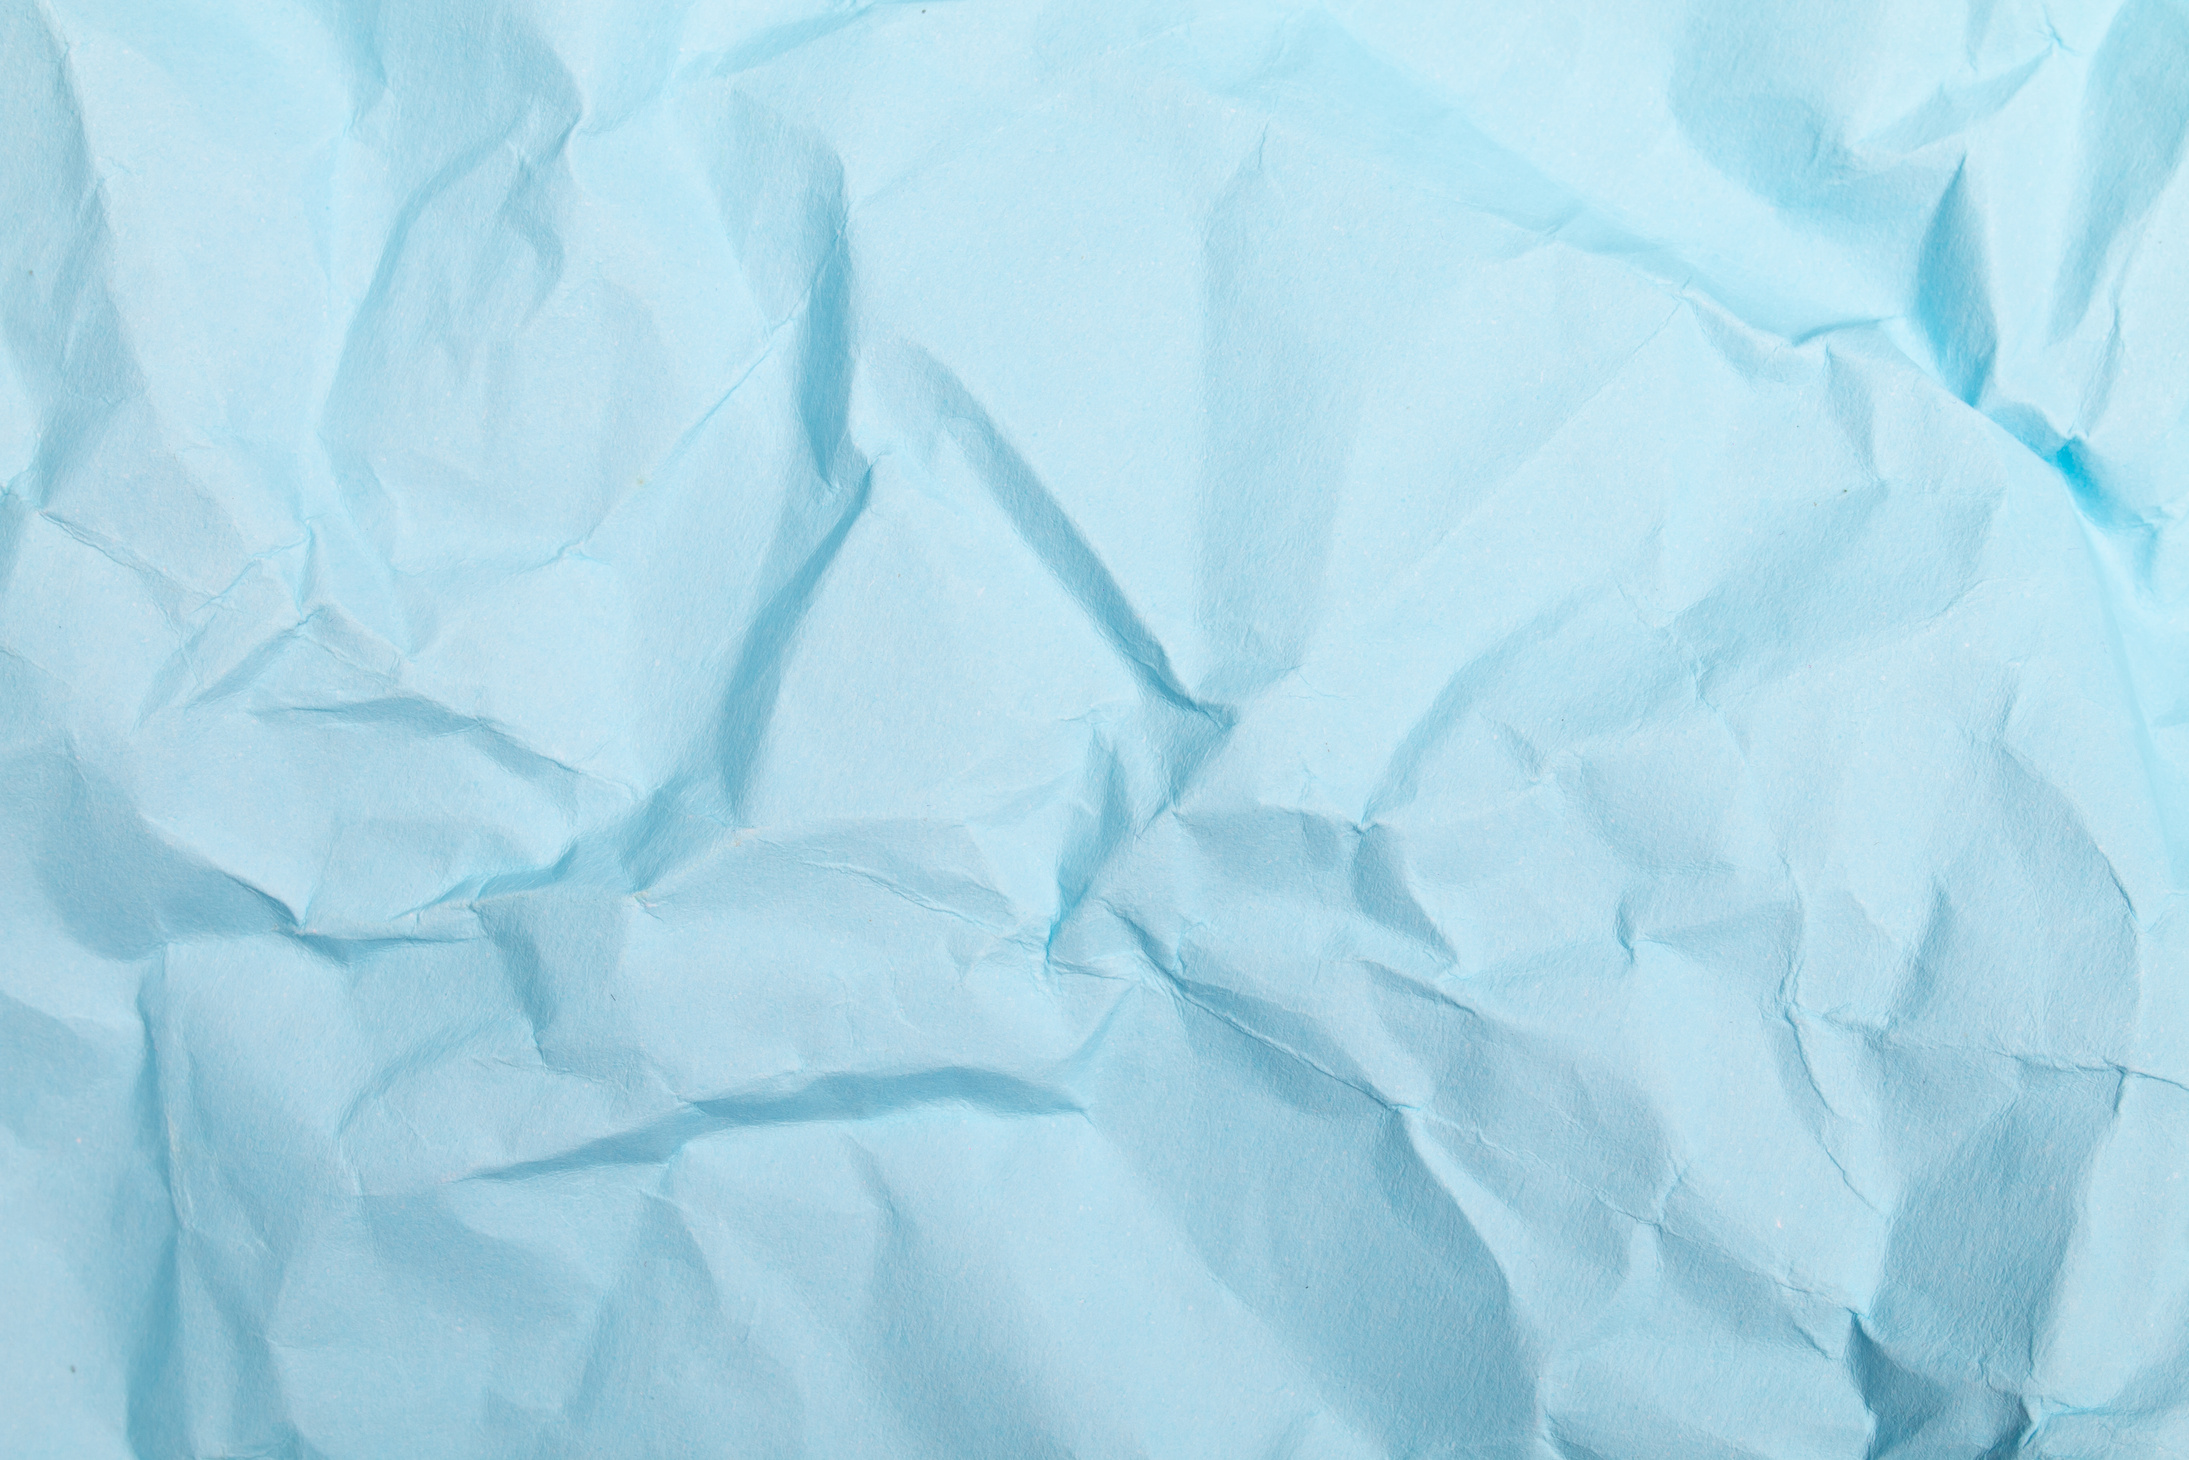  A Close-Up Shot of a Crumpled Blue Paper